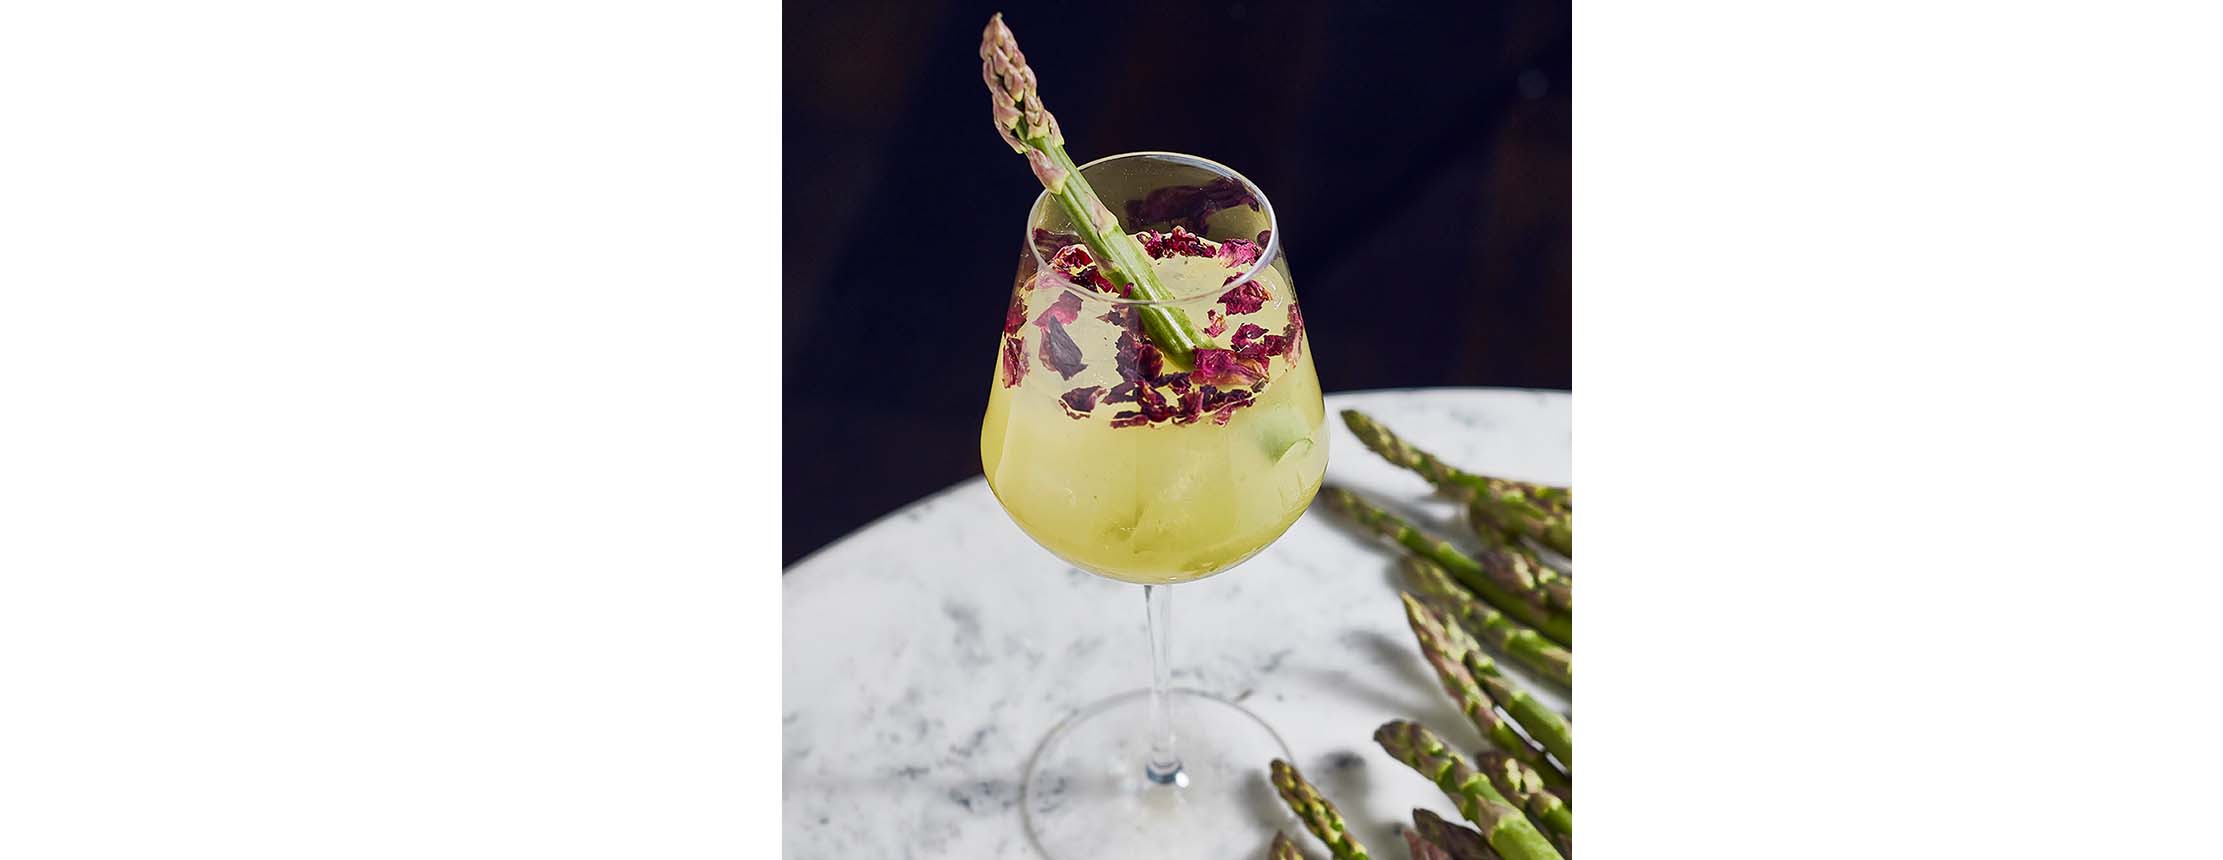 Côte restaurants asparagus cocktail